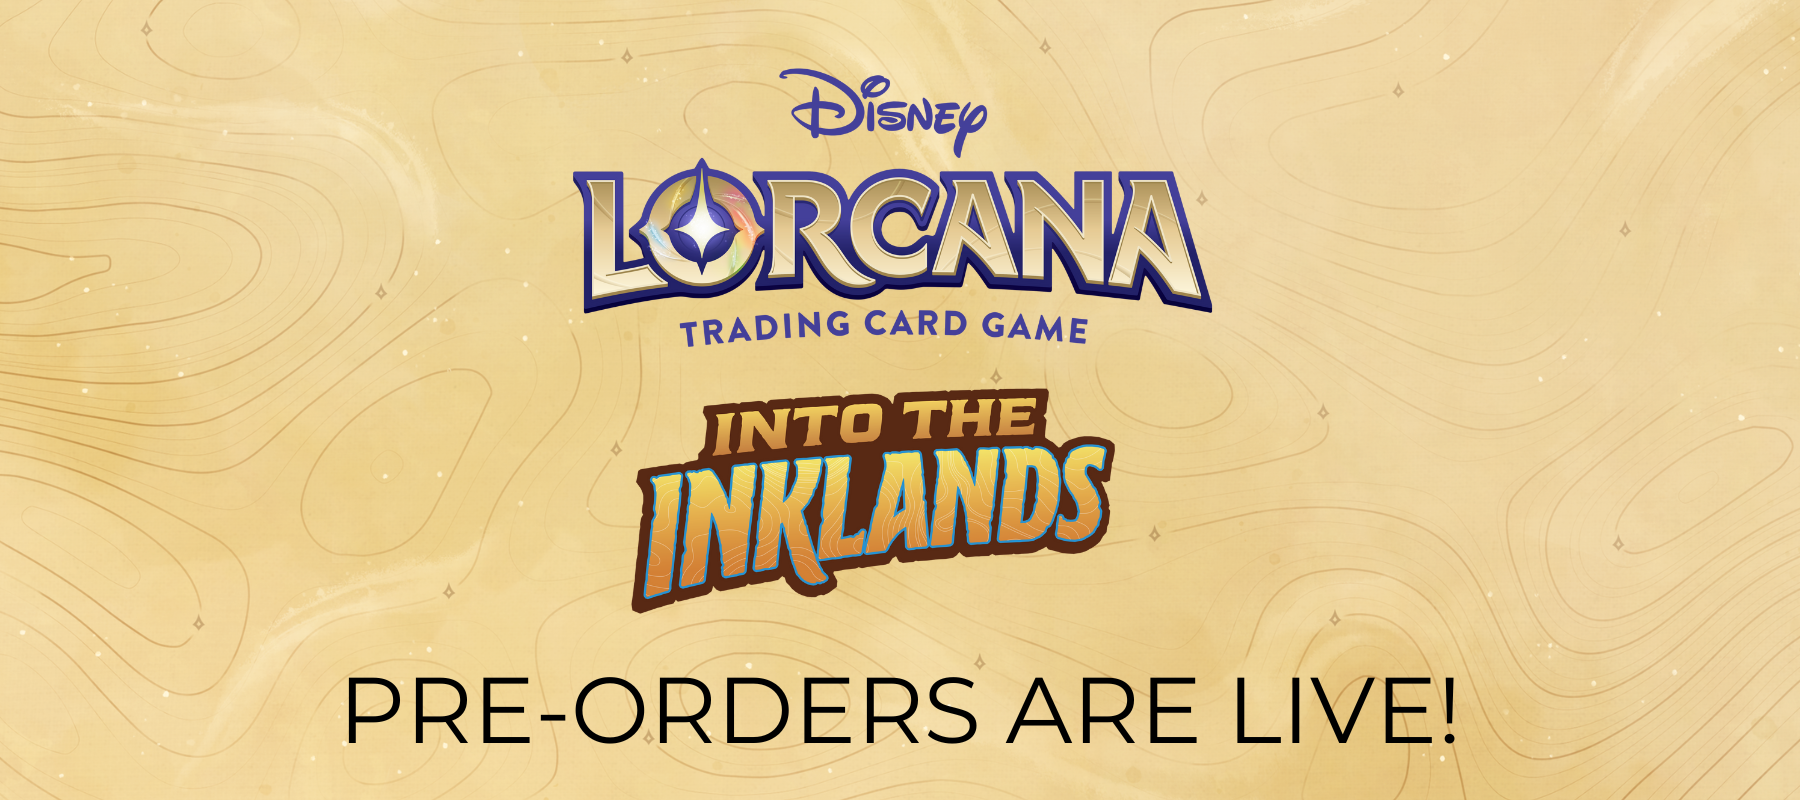 Lorcana Inklands - Shop MinMaxGames for Disney Lorcana TCG